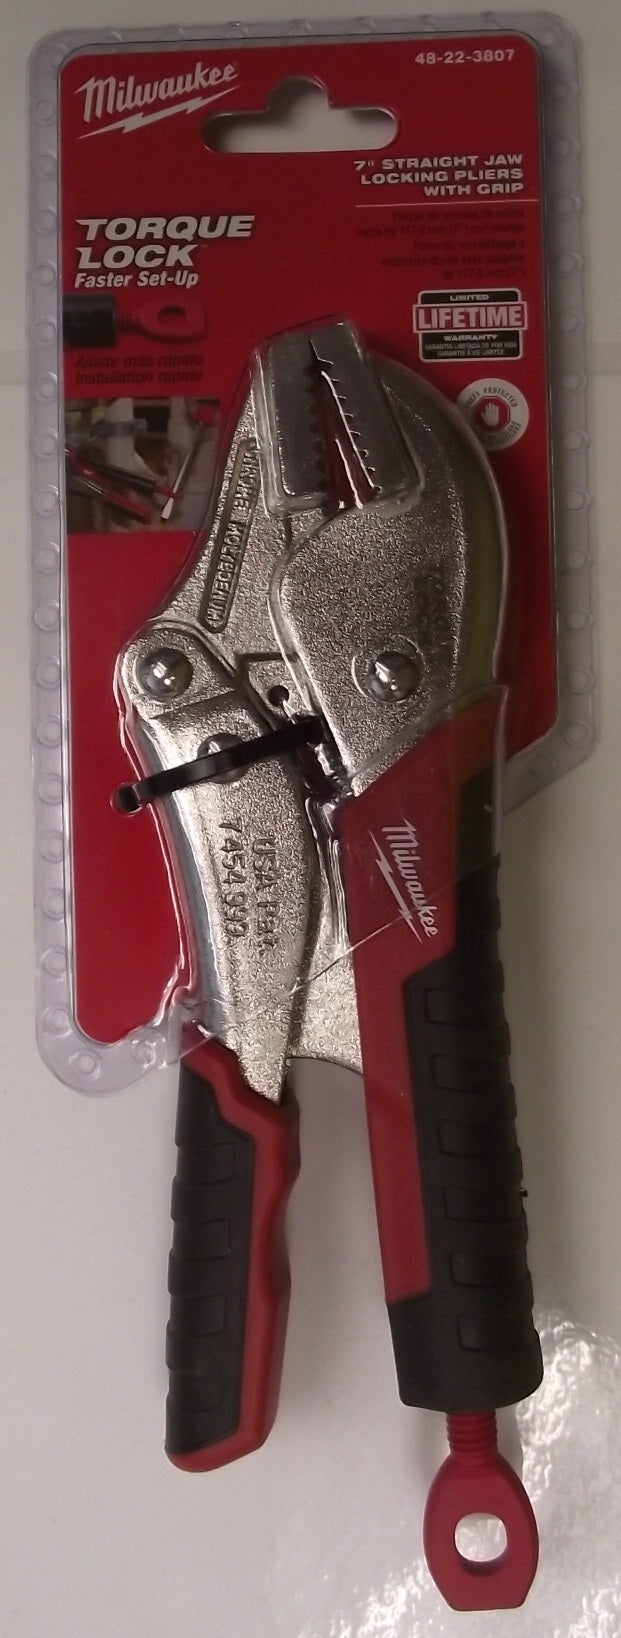 MILWAUKEE 48-22-3807 7" Straight Jaw Locking Pliers Torque Lock